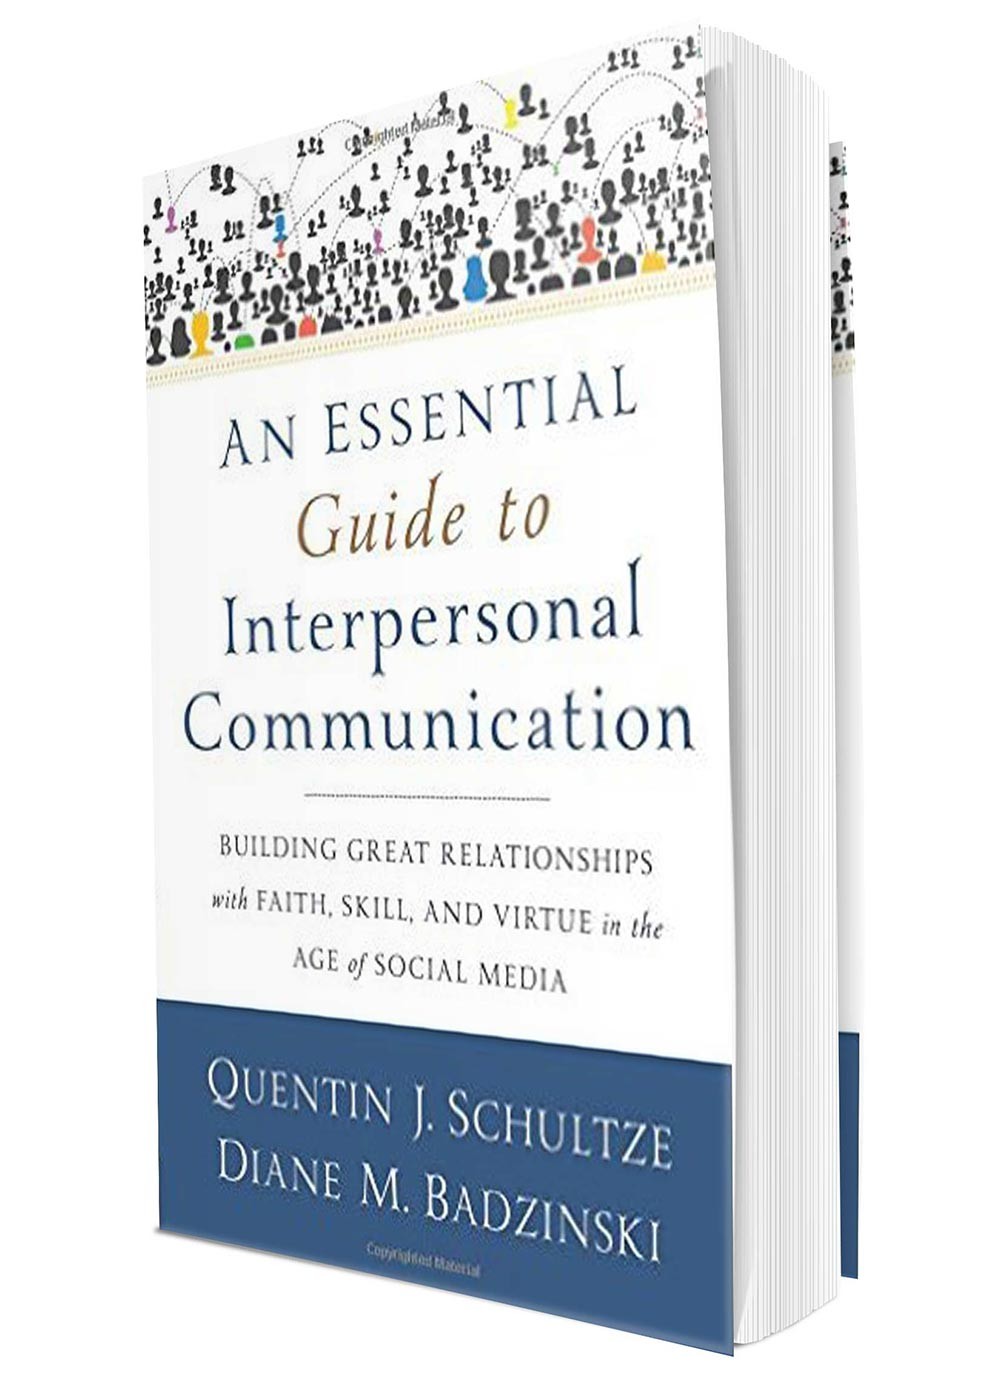 Reclaiming communication basics